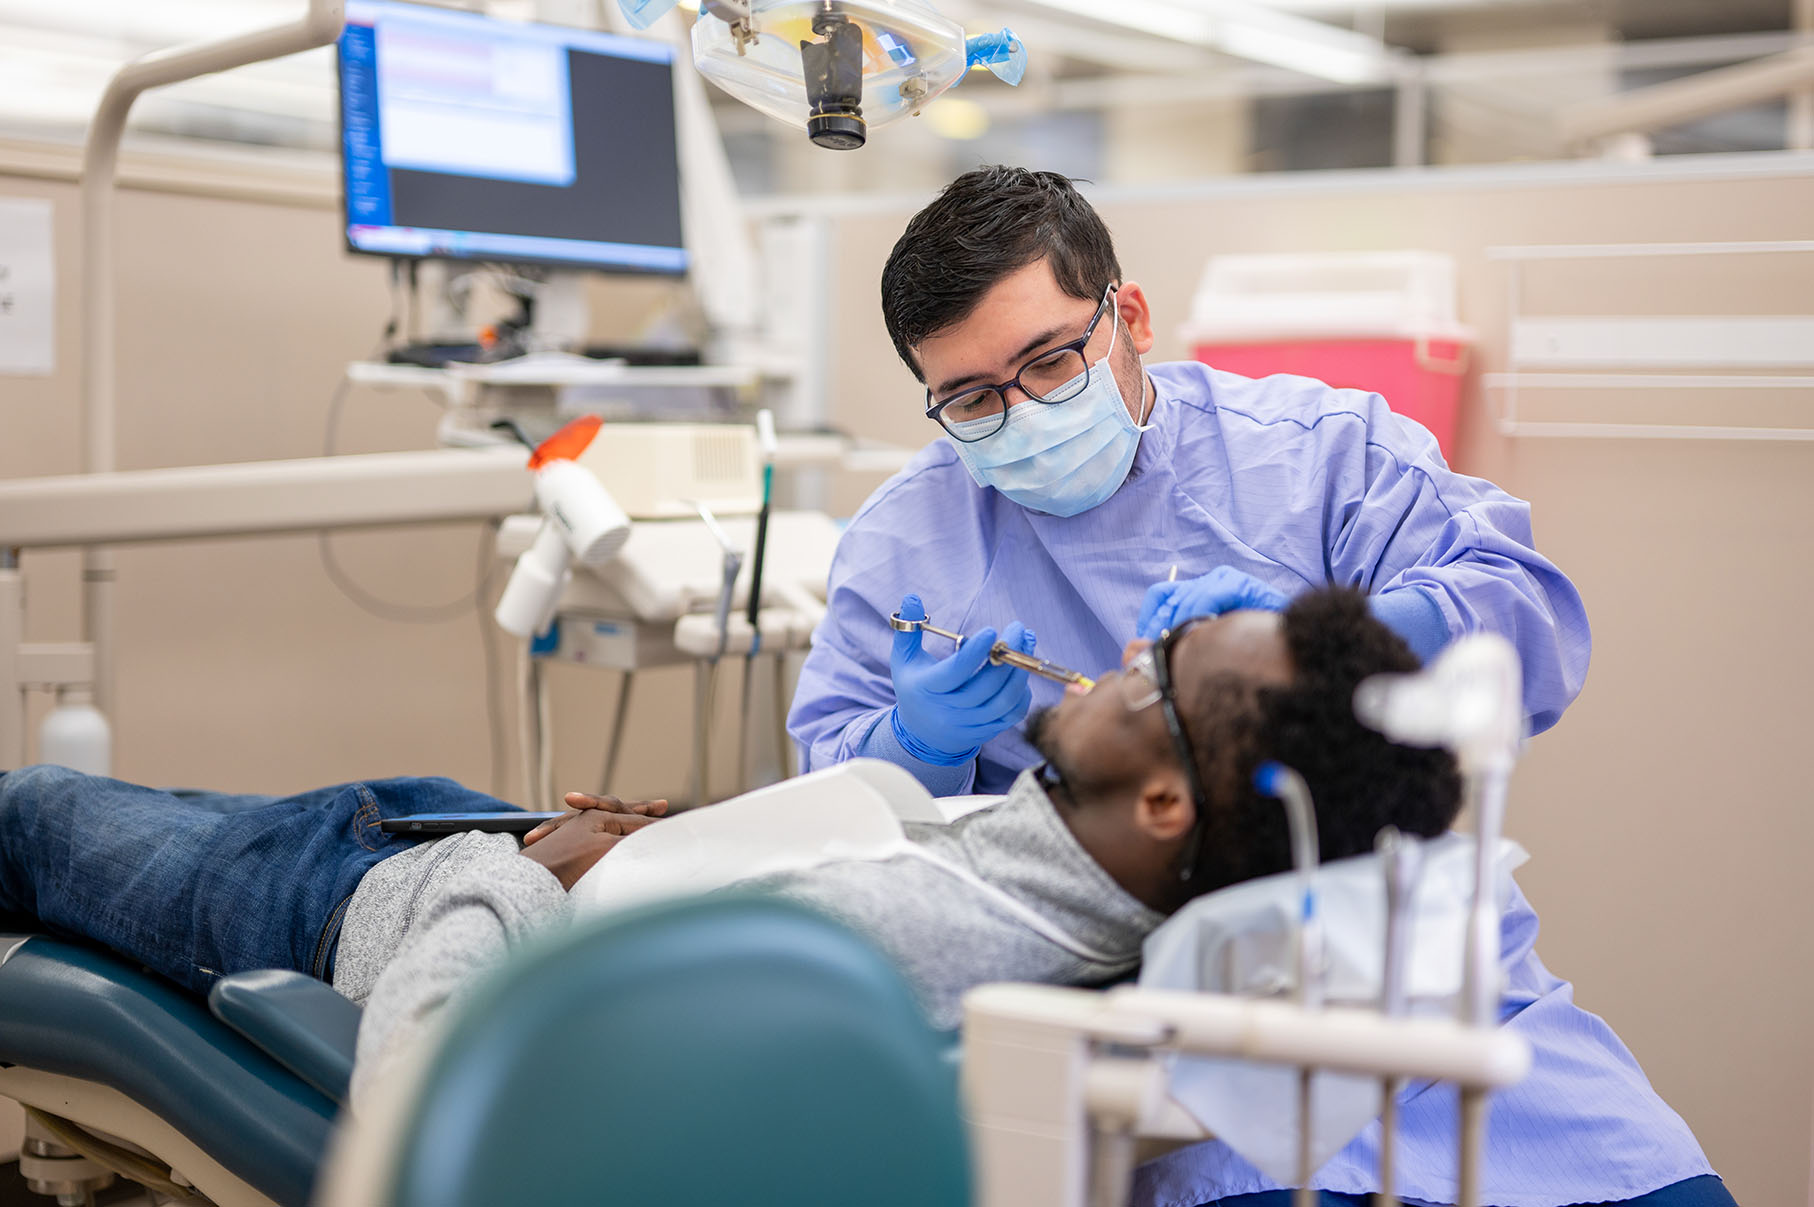 Graduate Periodontics resident cares for a patient